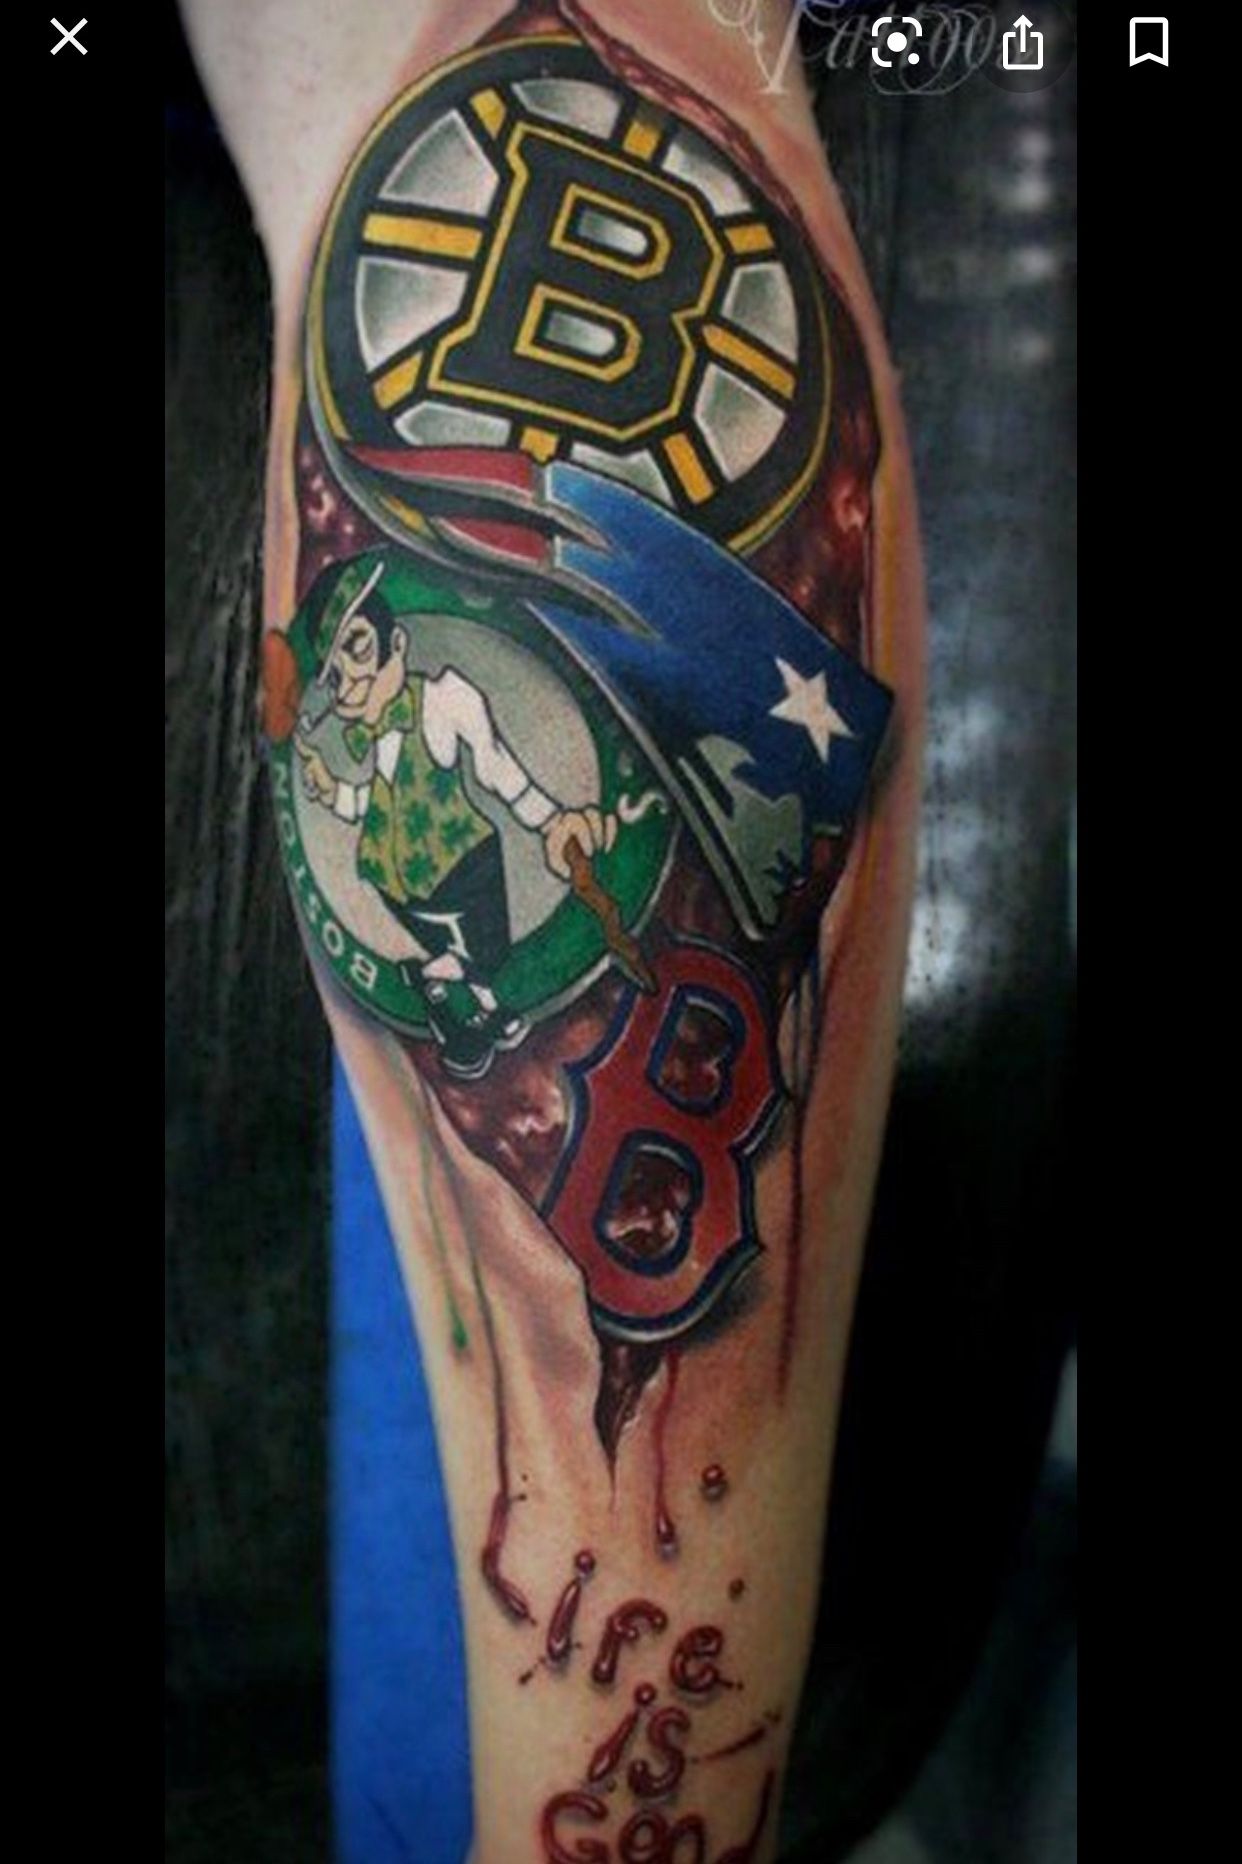 Love my tattoo! Go bruins!!!!  I tattoo, Boston bruins, Bruins